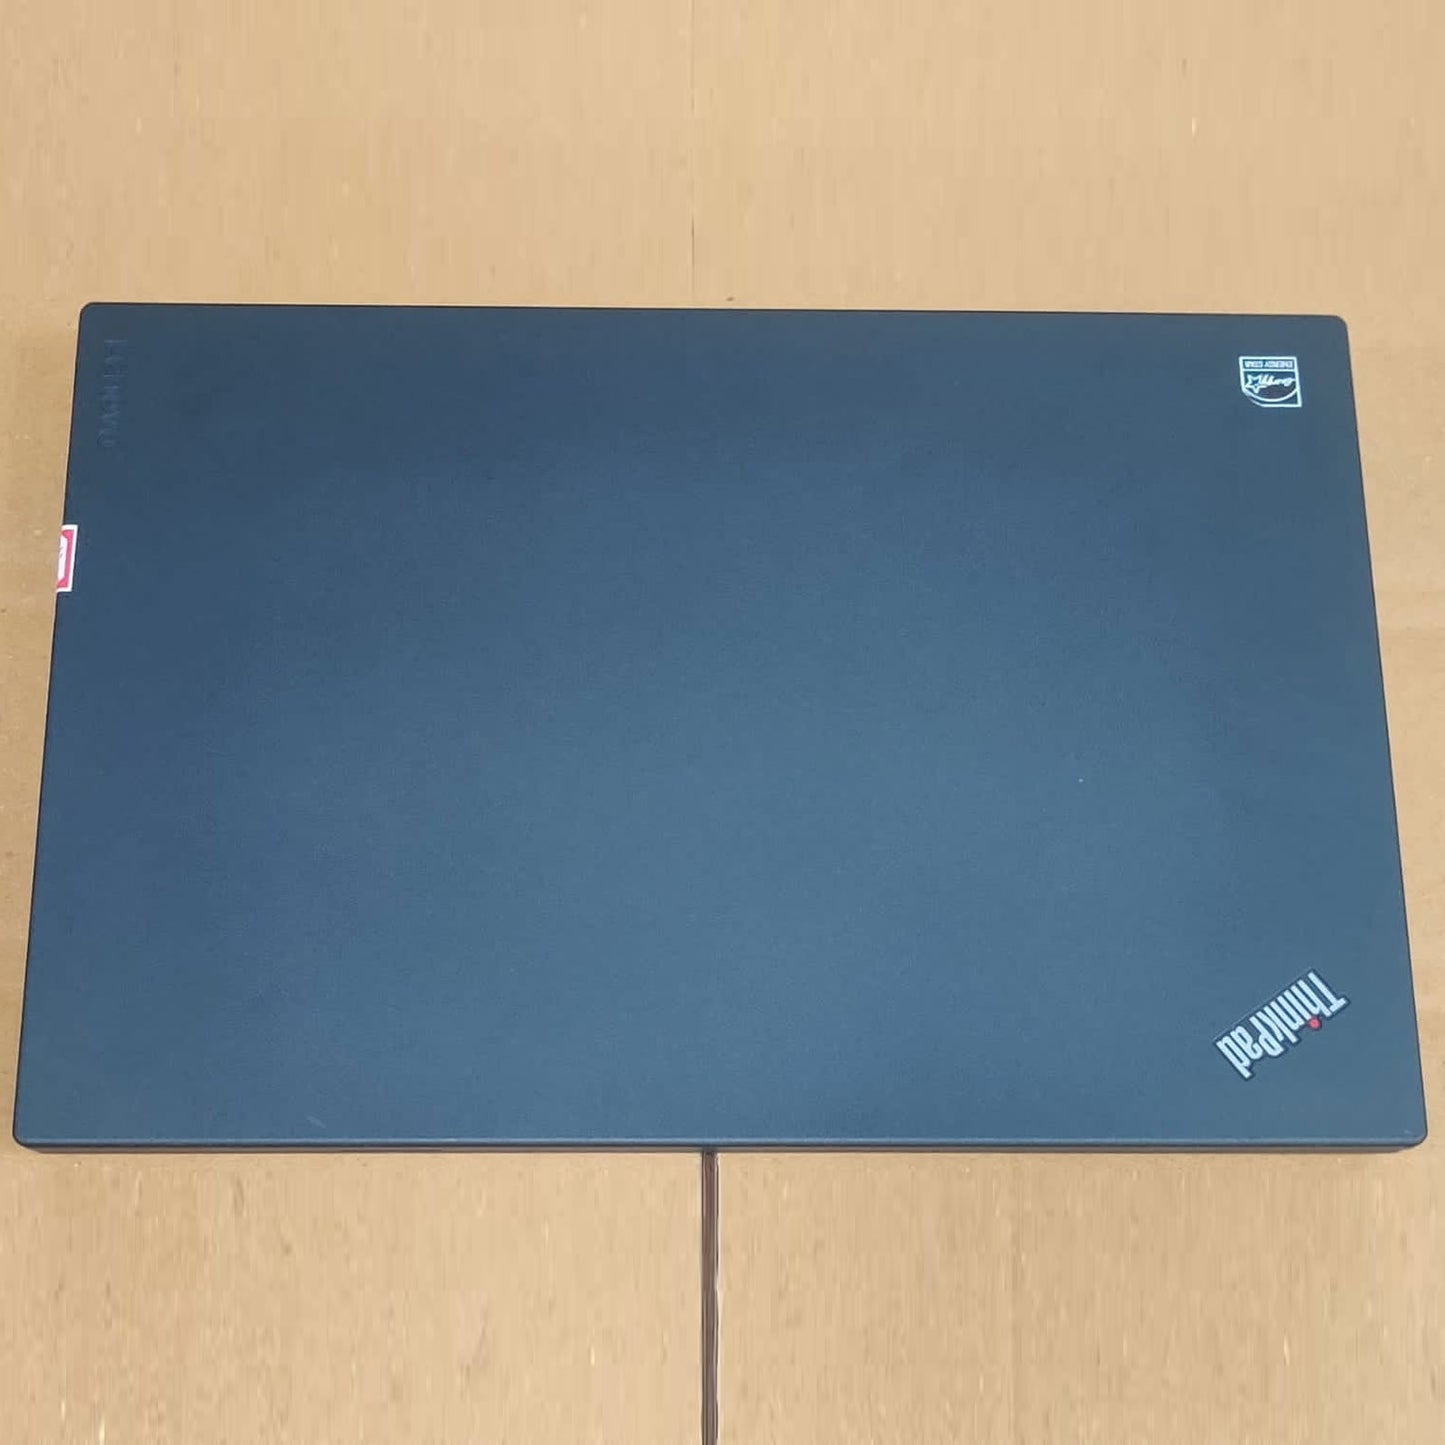 Renewed Lenovo T470s Laptop (Intel Quad Core i7 7th Gen | 8GB Ram | 256GB SSD | 14"  Touch Screen)